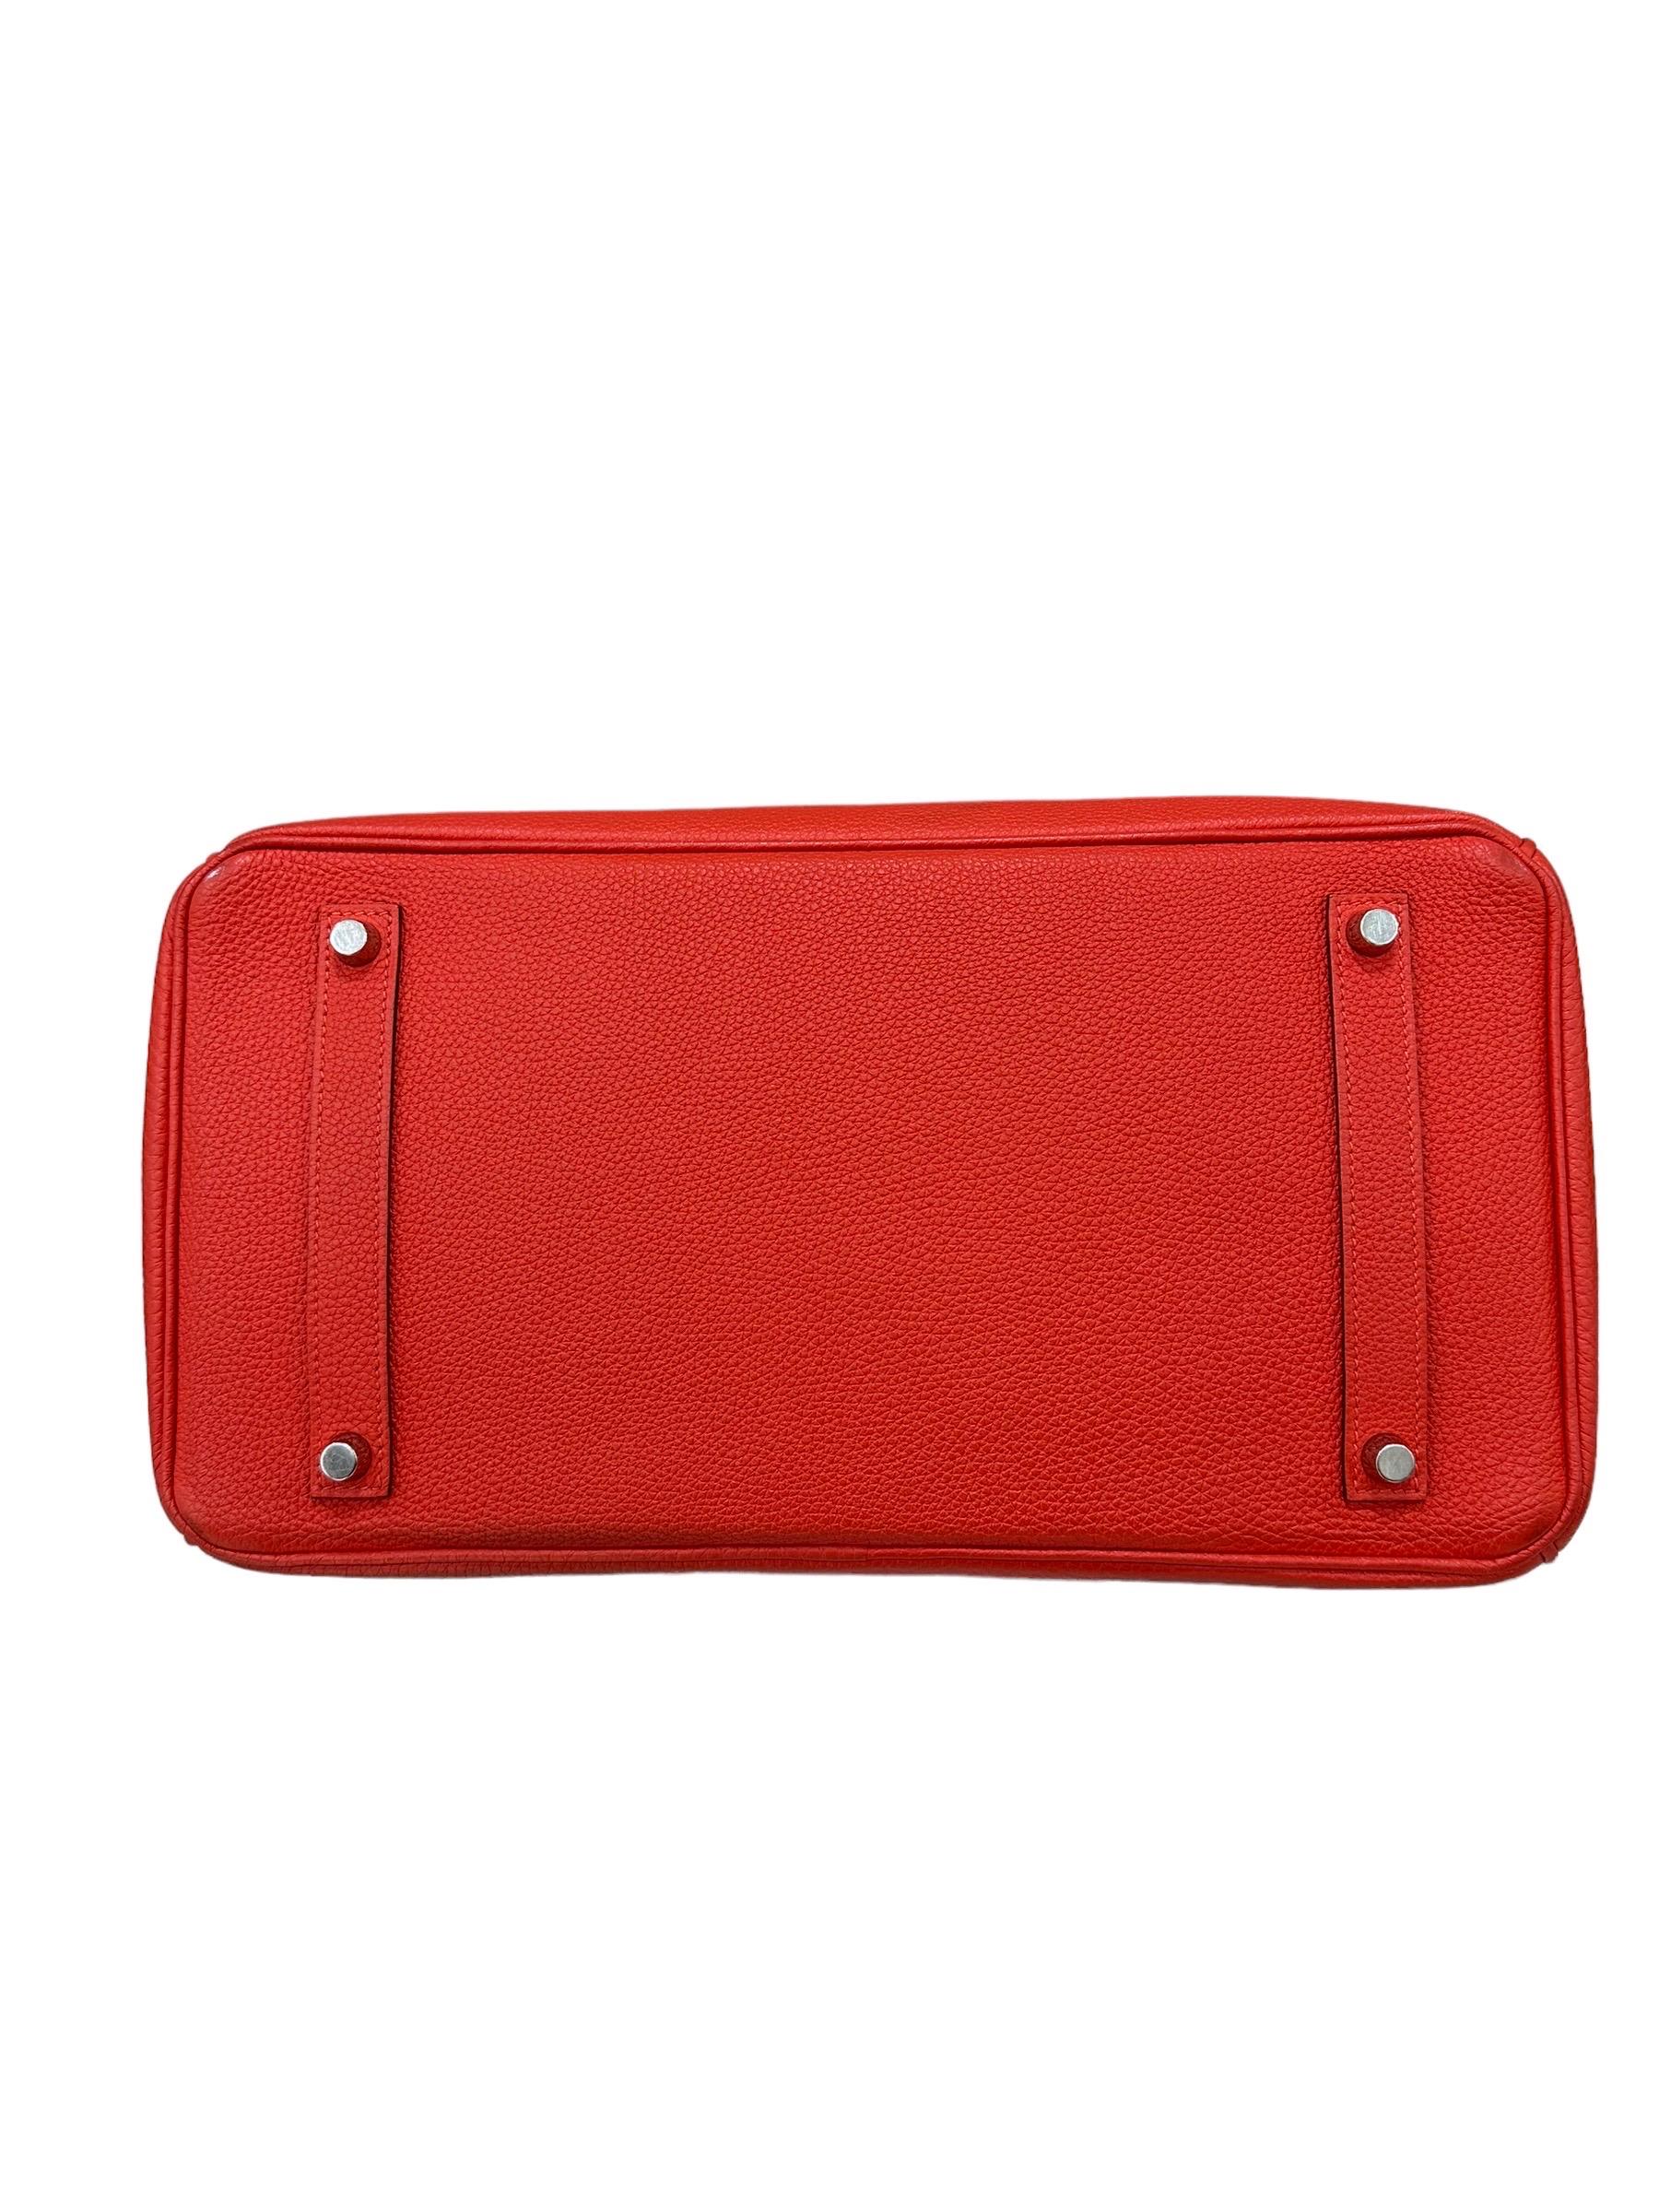 2011 Hermès Birkin 35 Togo Leather Rouge Capucine Top Handle Bag For Sale 6